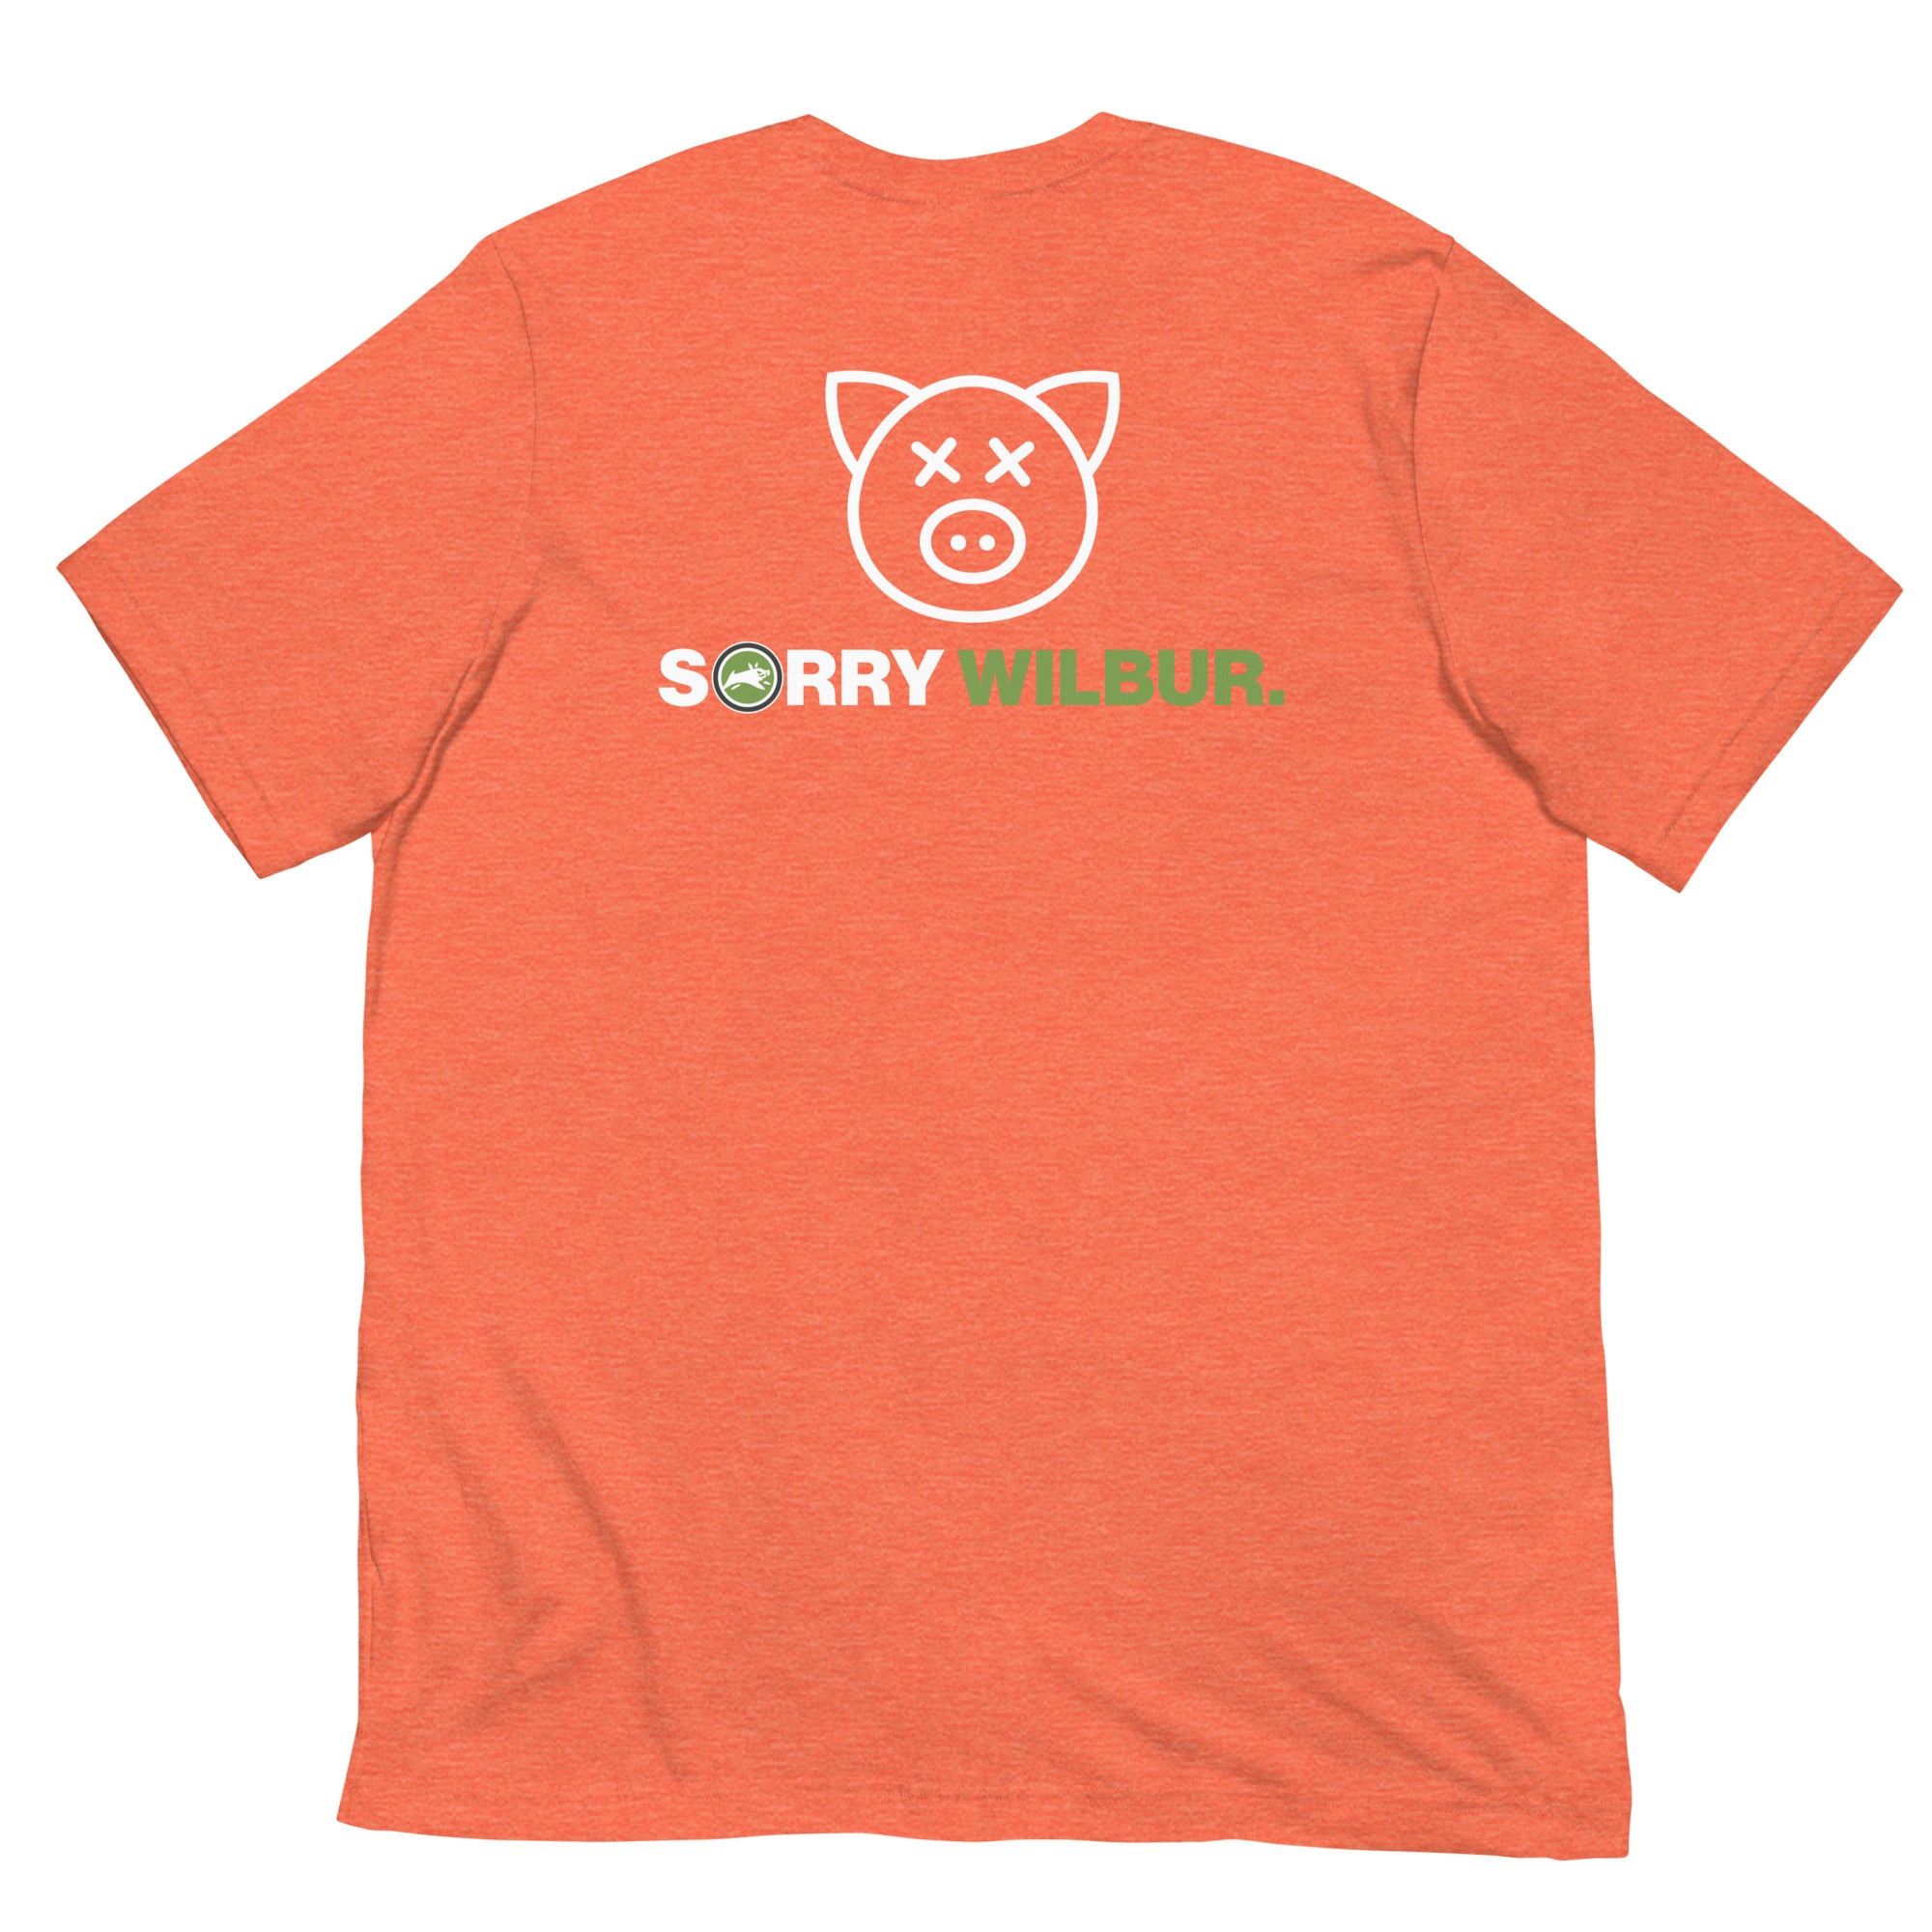 Sorry Wilbur. - Short-Sleeve Unisex T-Shirt